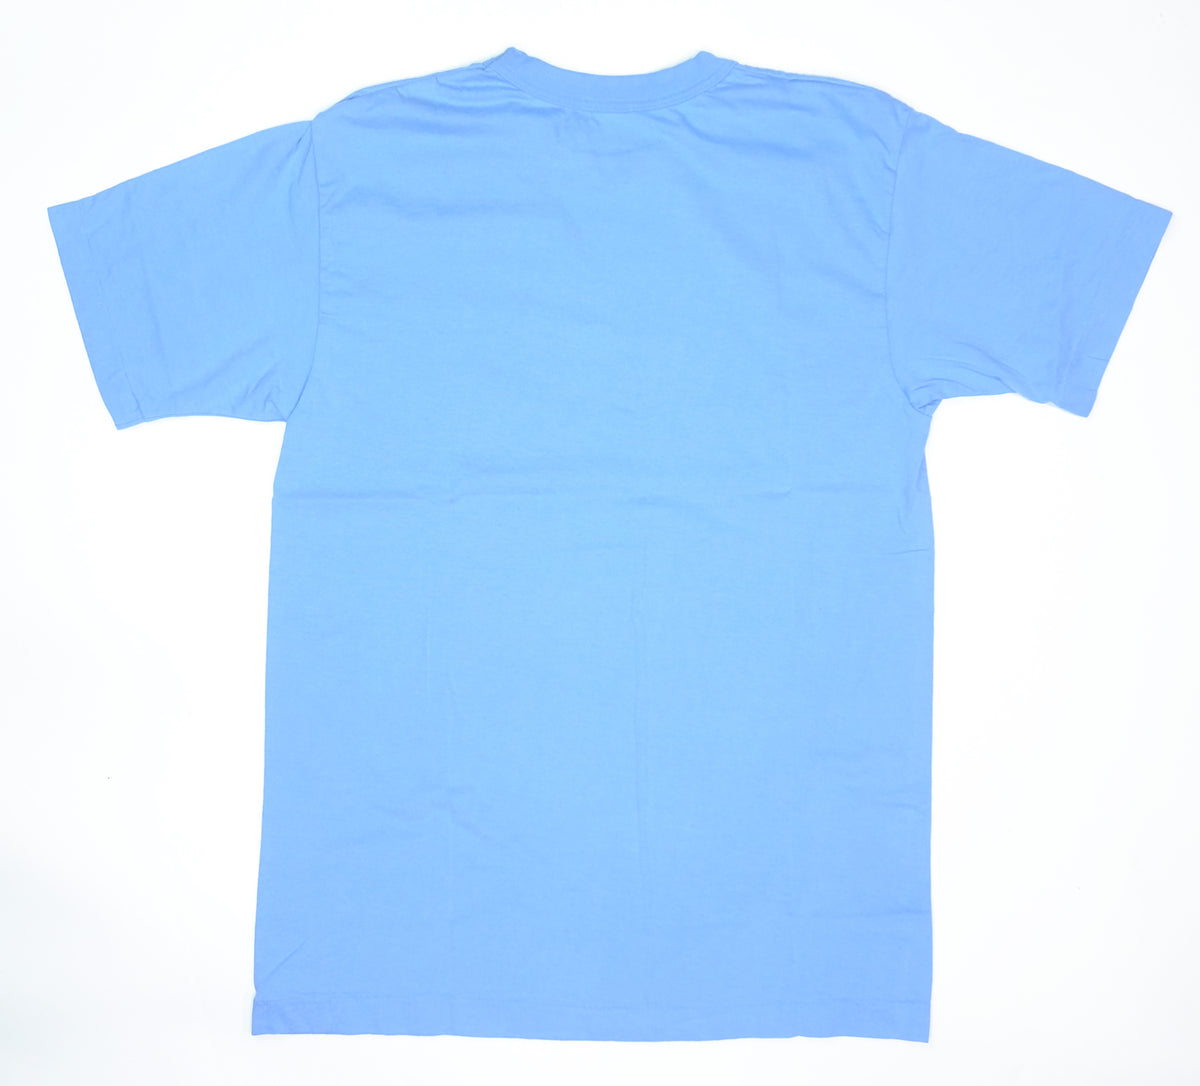 Utilitees 5.5oz Loopwheel Crew Neck T-Shirt Light Blue ( Iron